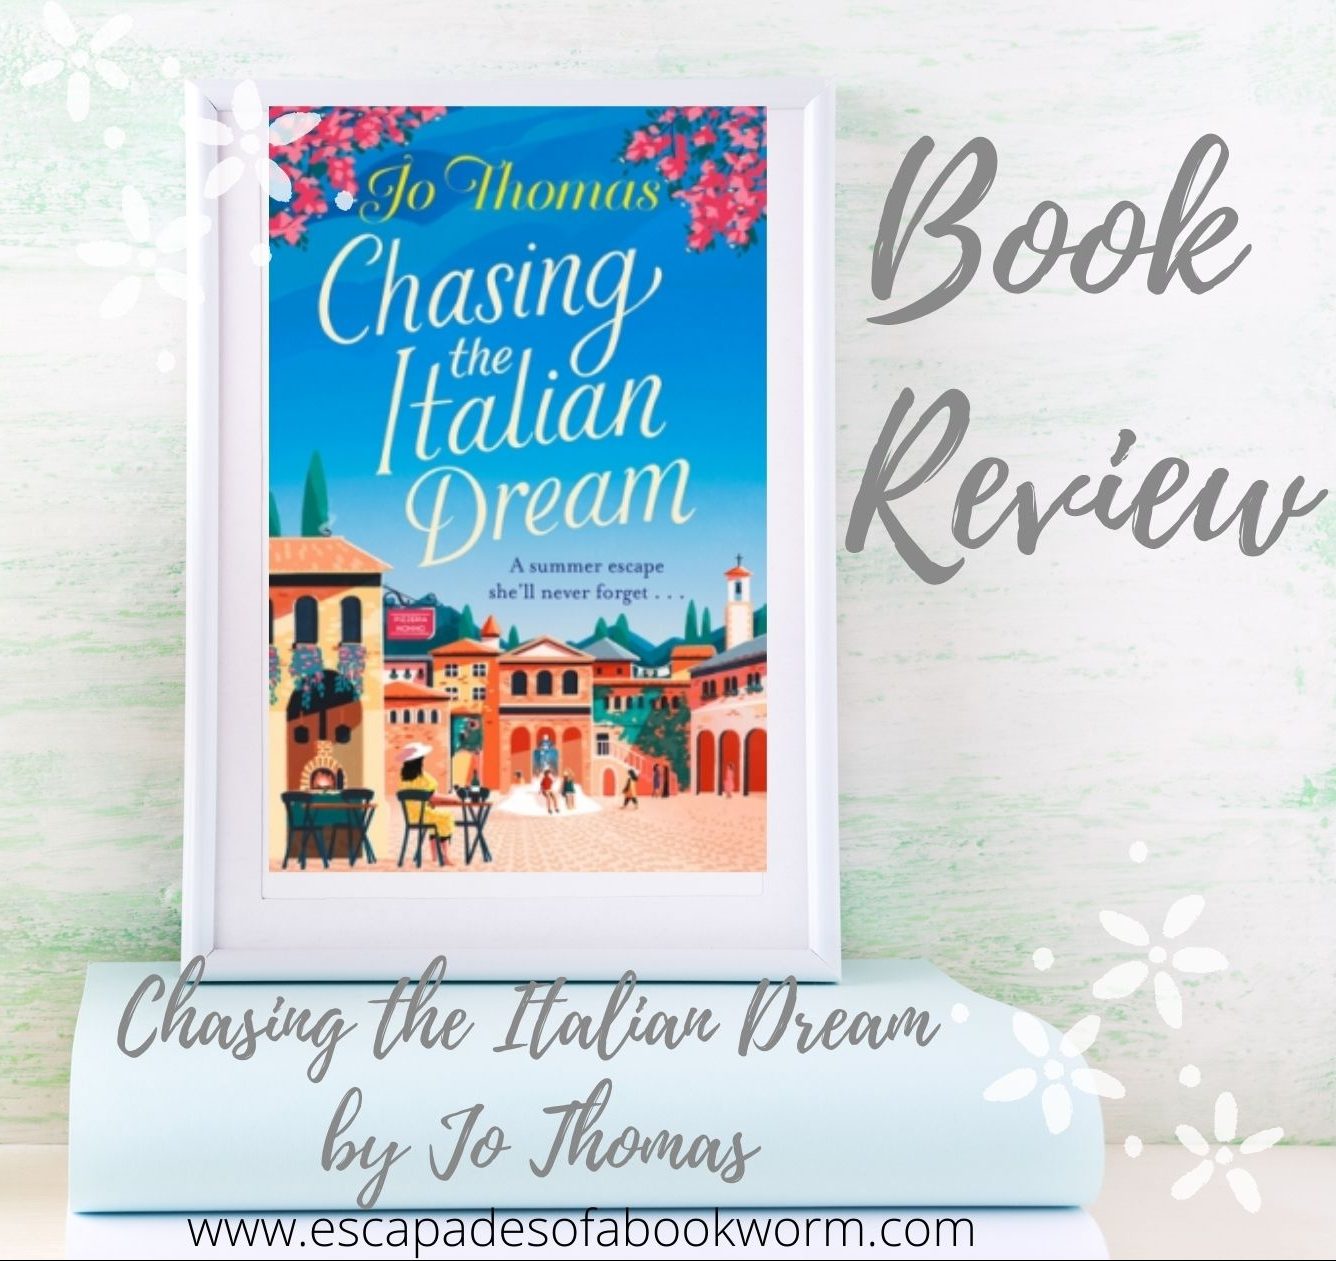 Chasing the Italian Dream by Jo Thomas